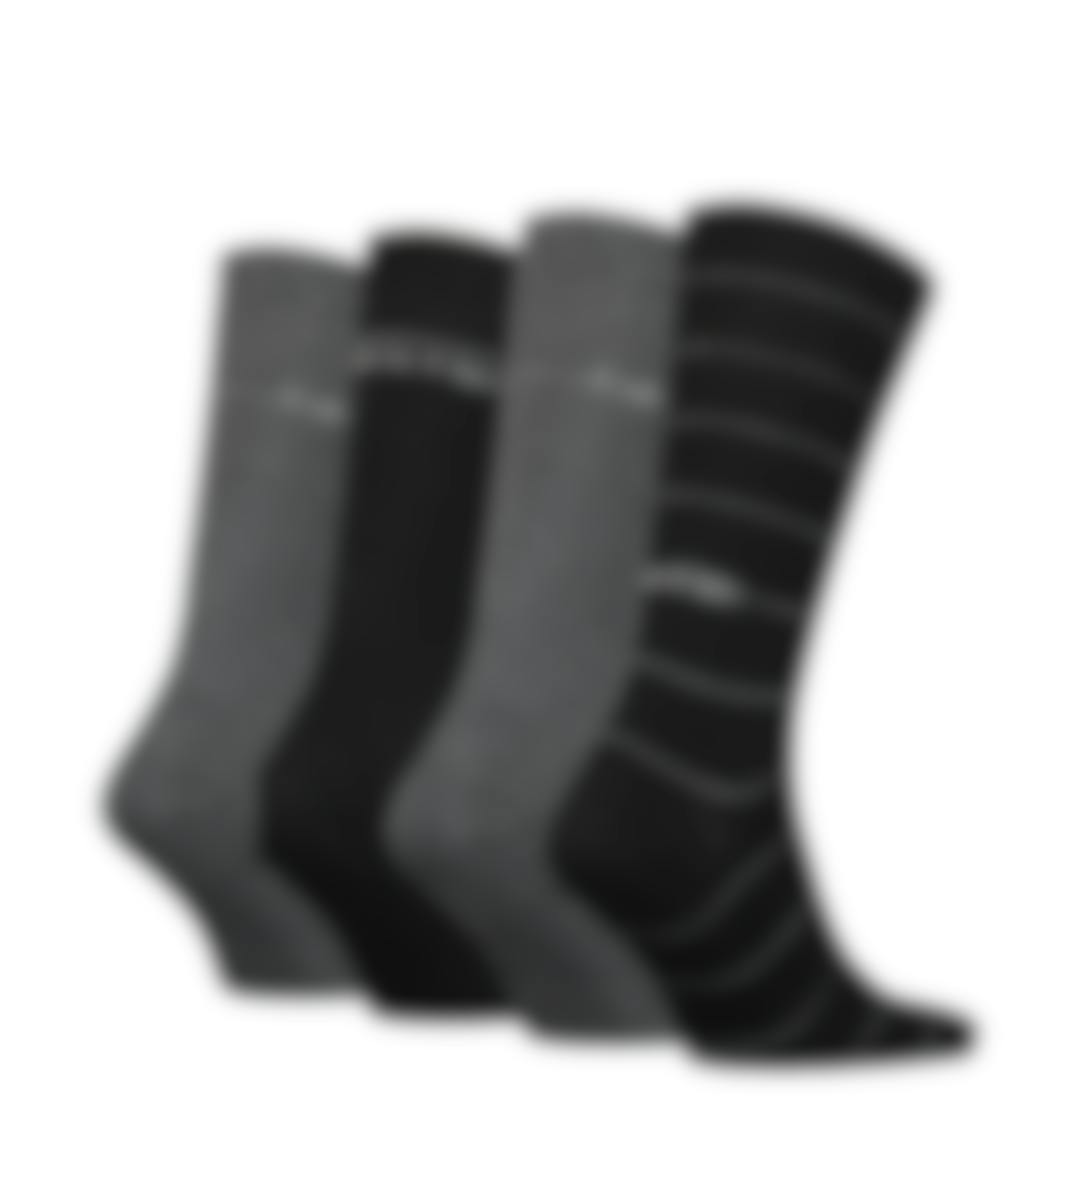 Calvin Klein sokken 4 paar Stripe Tin Giftbox Sock H